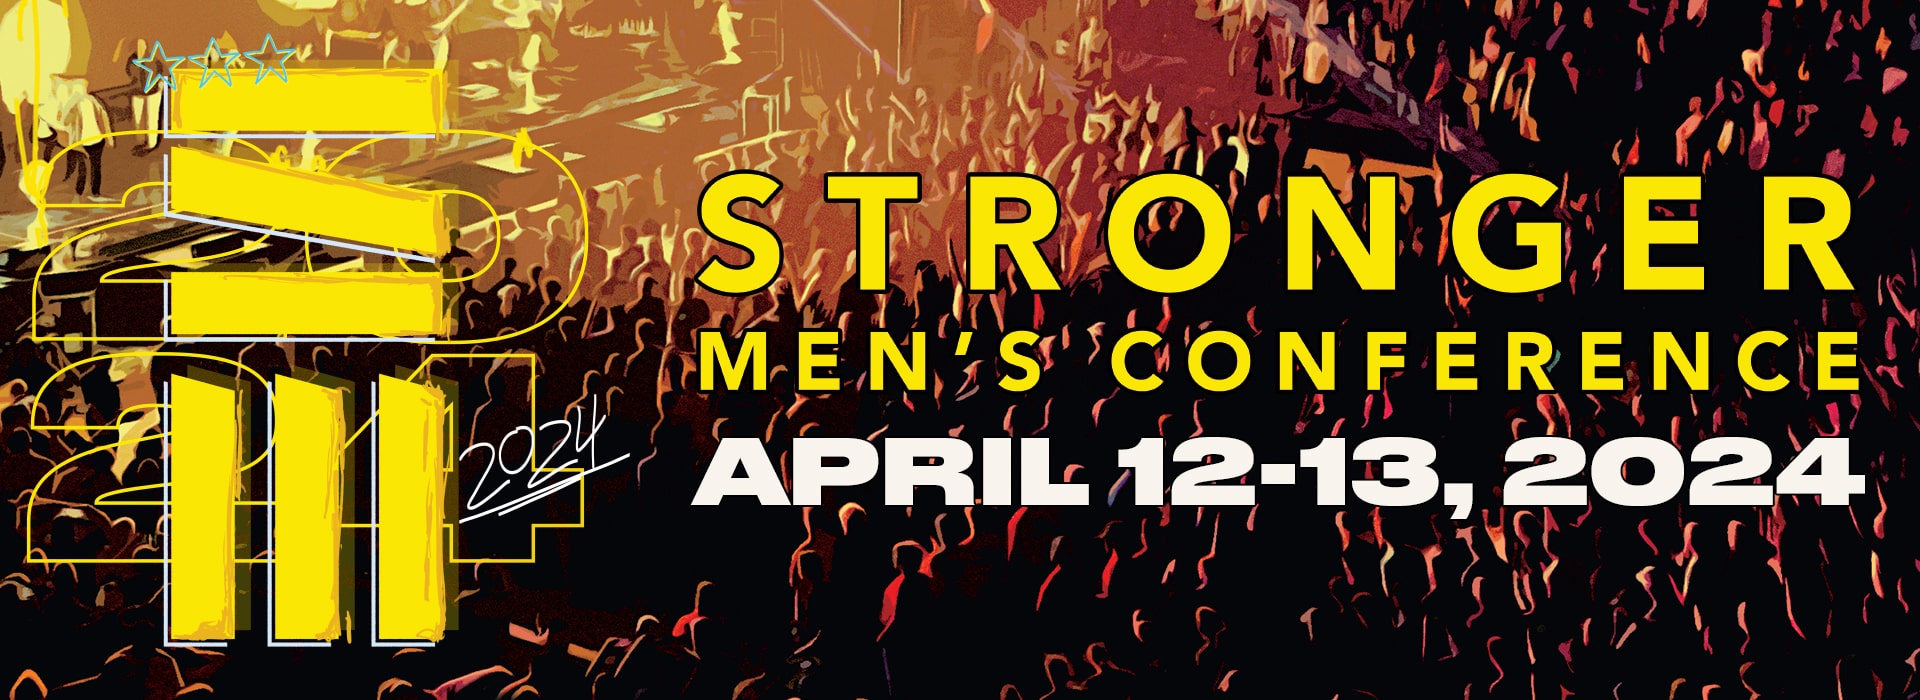 Stronger Men's Conference 2024 James River Church Brushfire